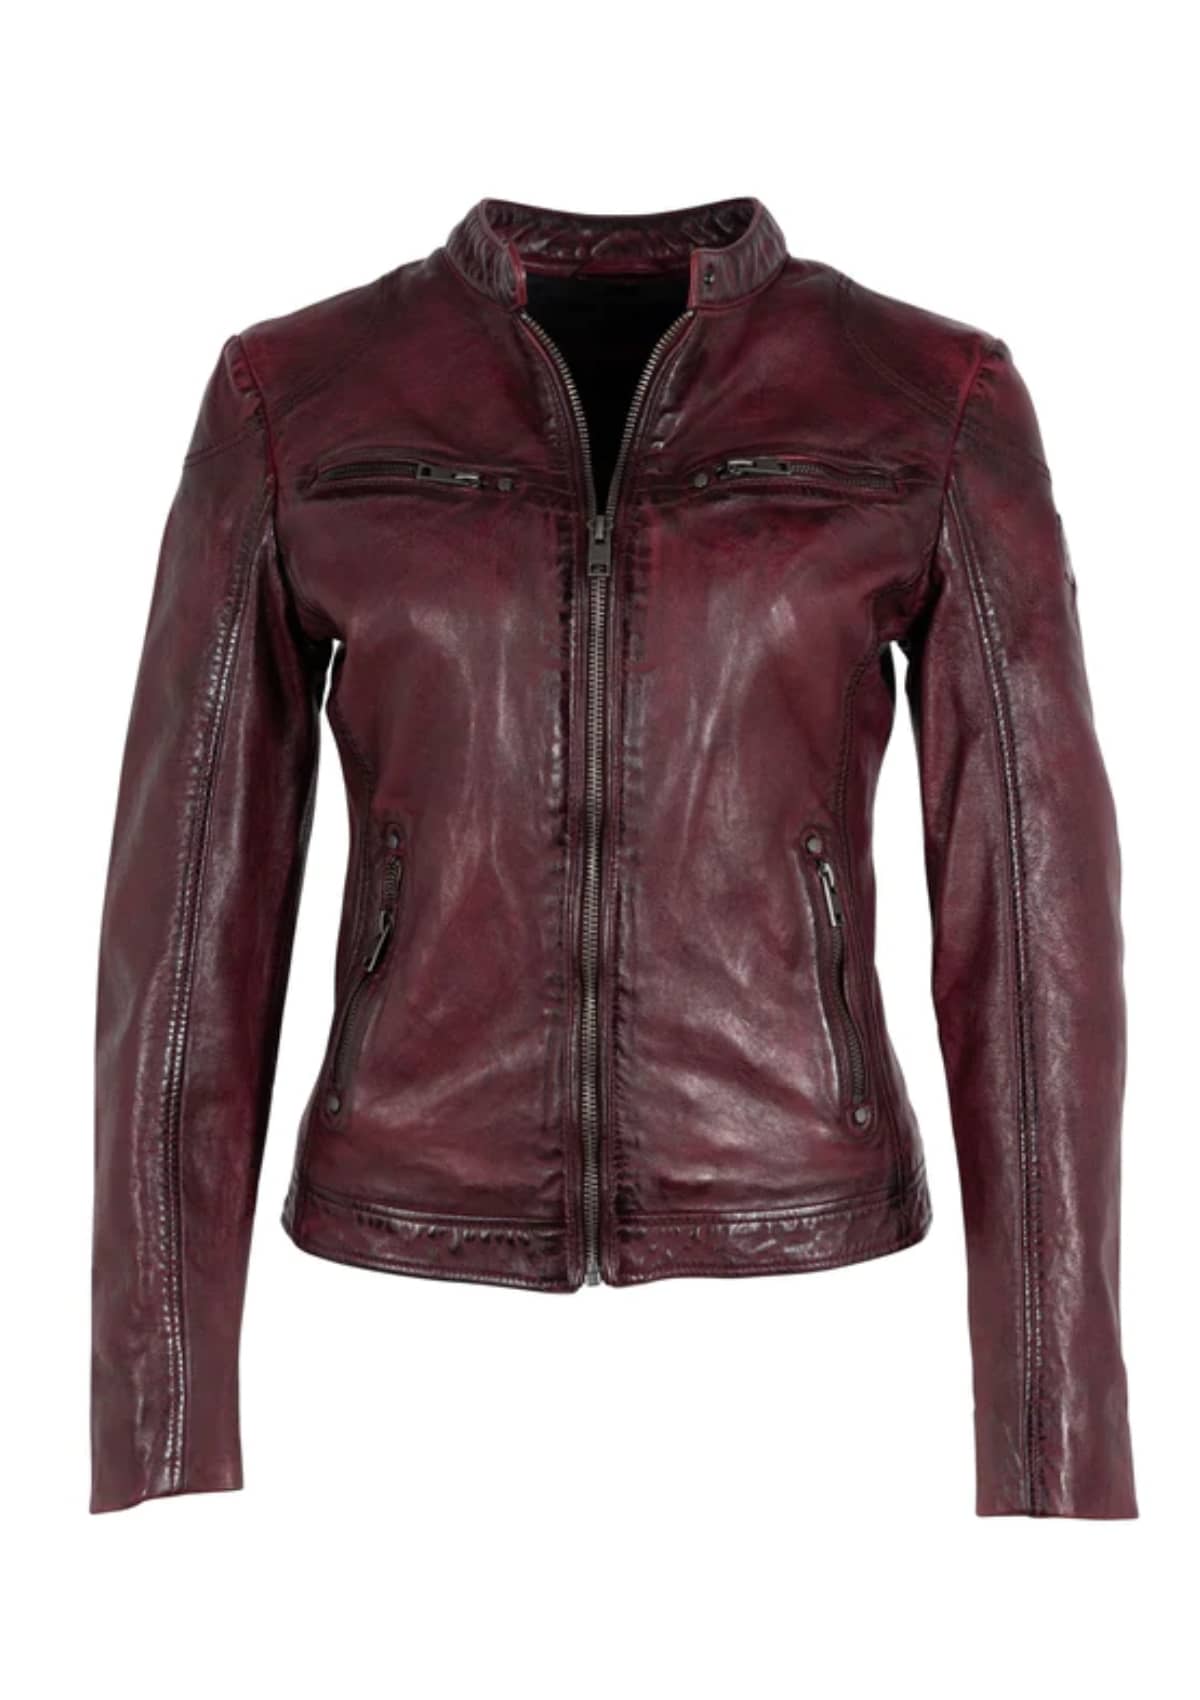 ZIYA Leather Jacket with Front Zip Pockets -Mauritius GmbH Int. Fashion- Ruby Jane-